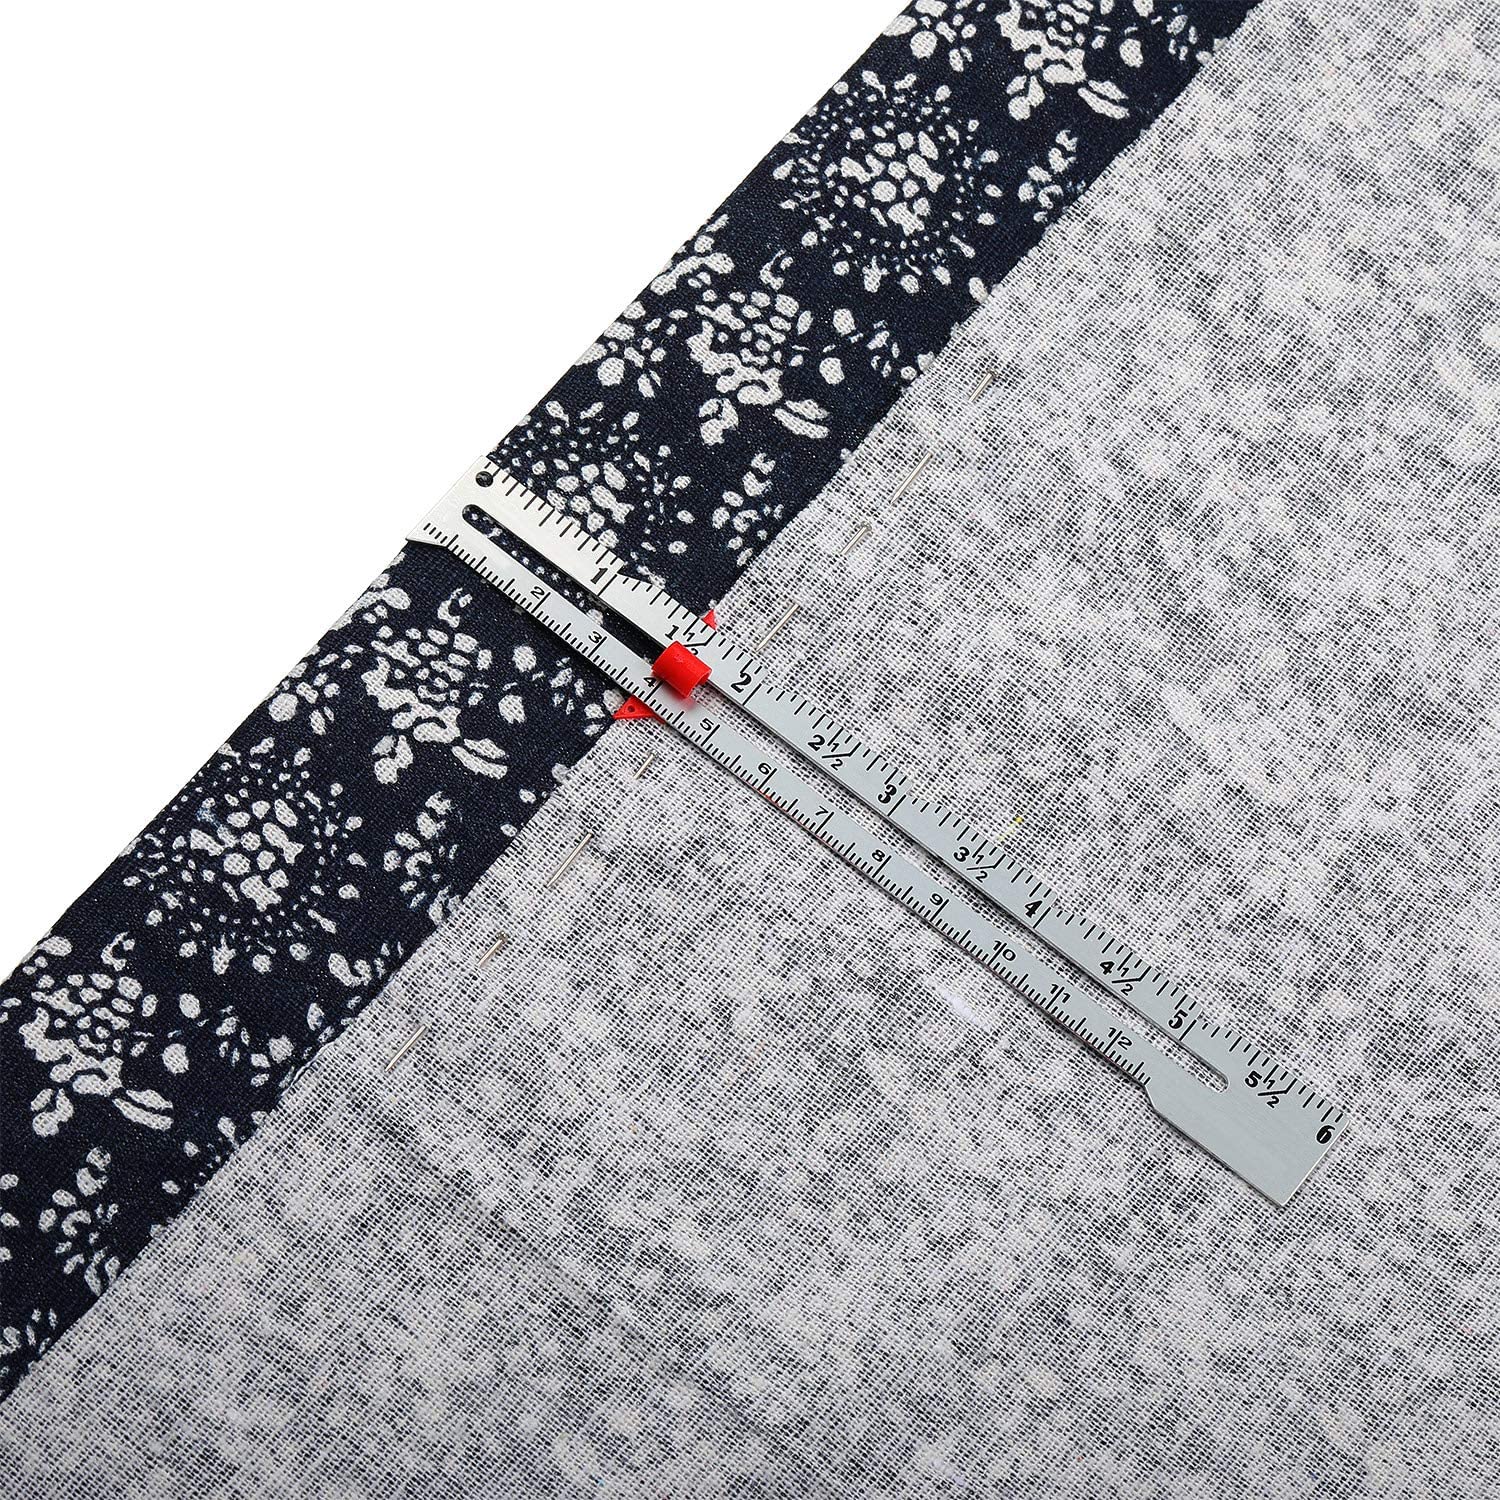 Sliding Gauge Sewing Measuring Tool Stainless Steel Quilting Ruler for  Knitting Crafting Sewing Beginner Hemming Measuring(6)